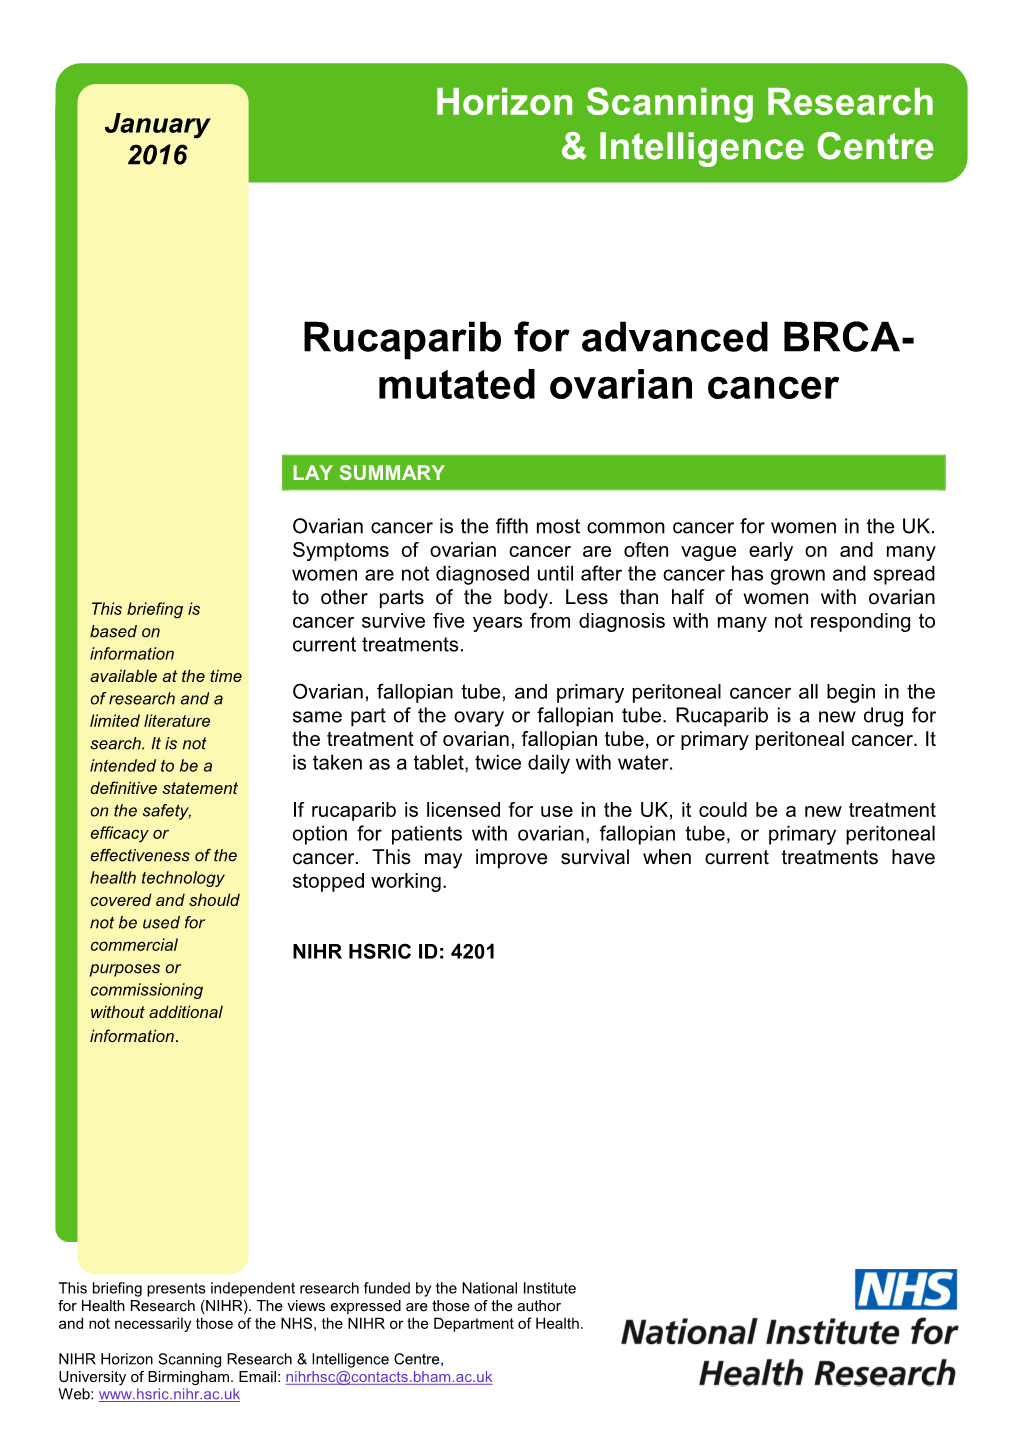 Rucaparib for Advanced BRCA-Mutated Ovarian Cancer